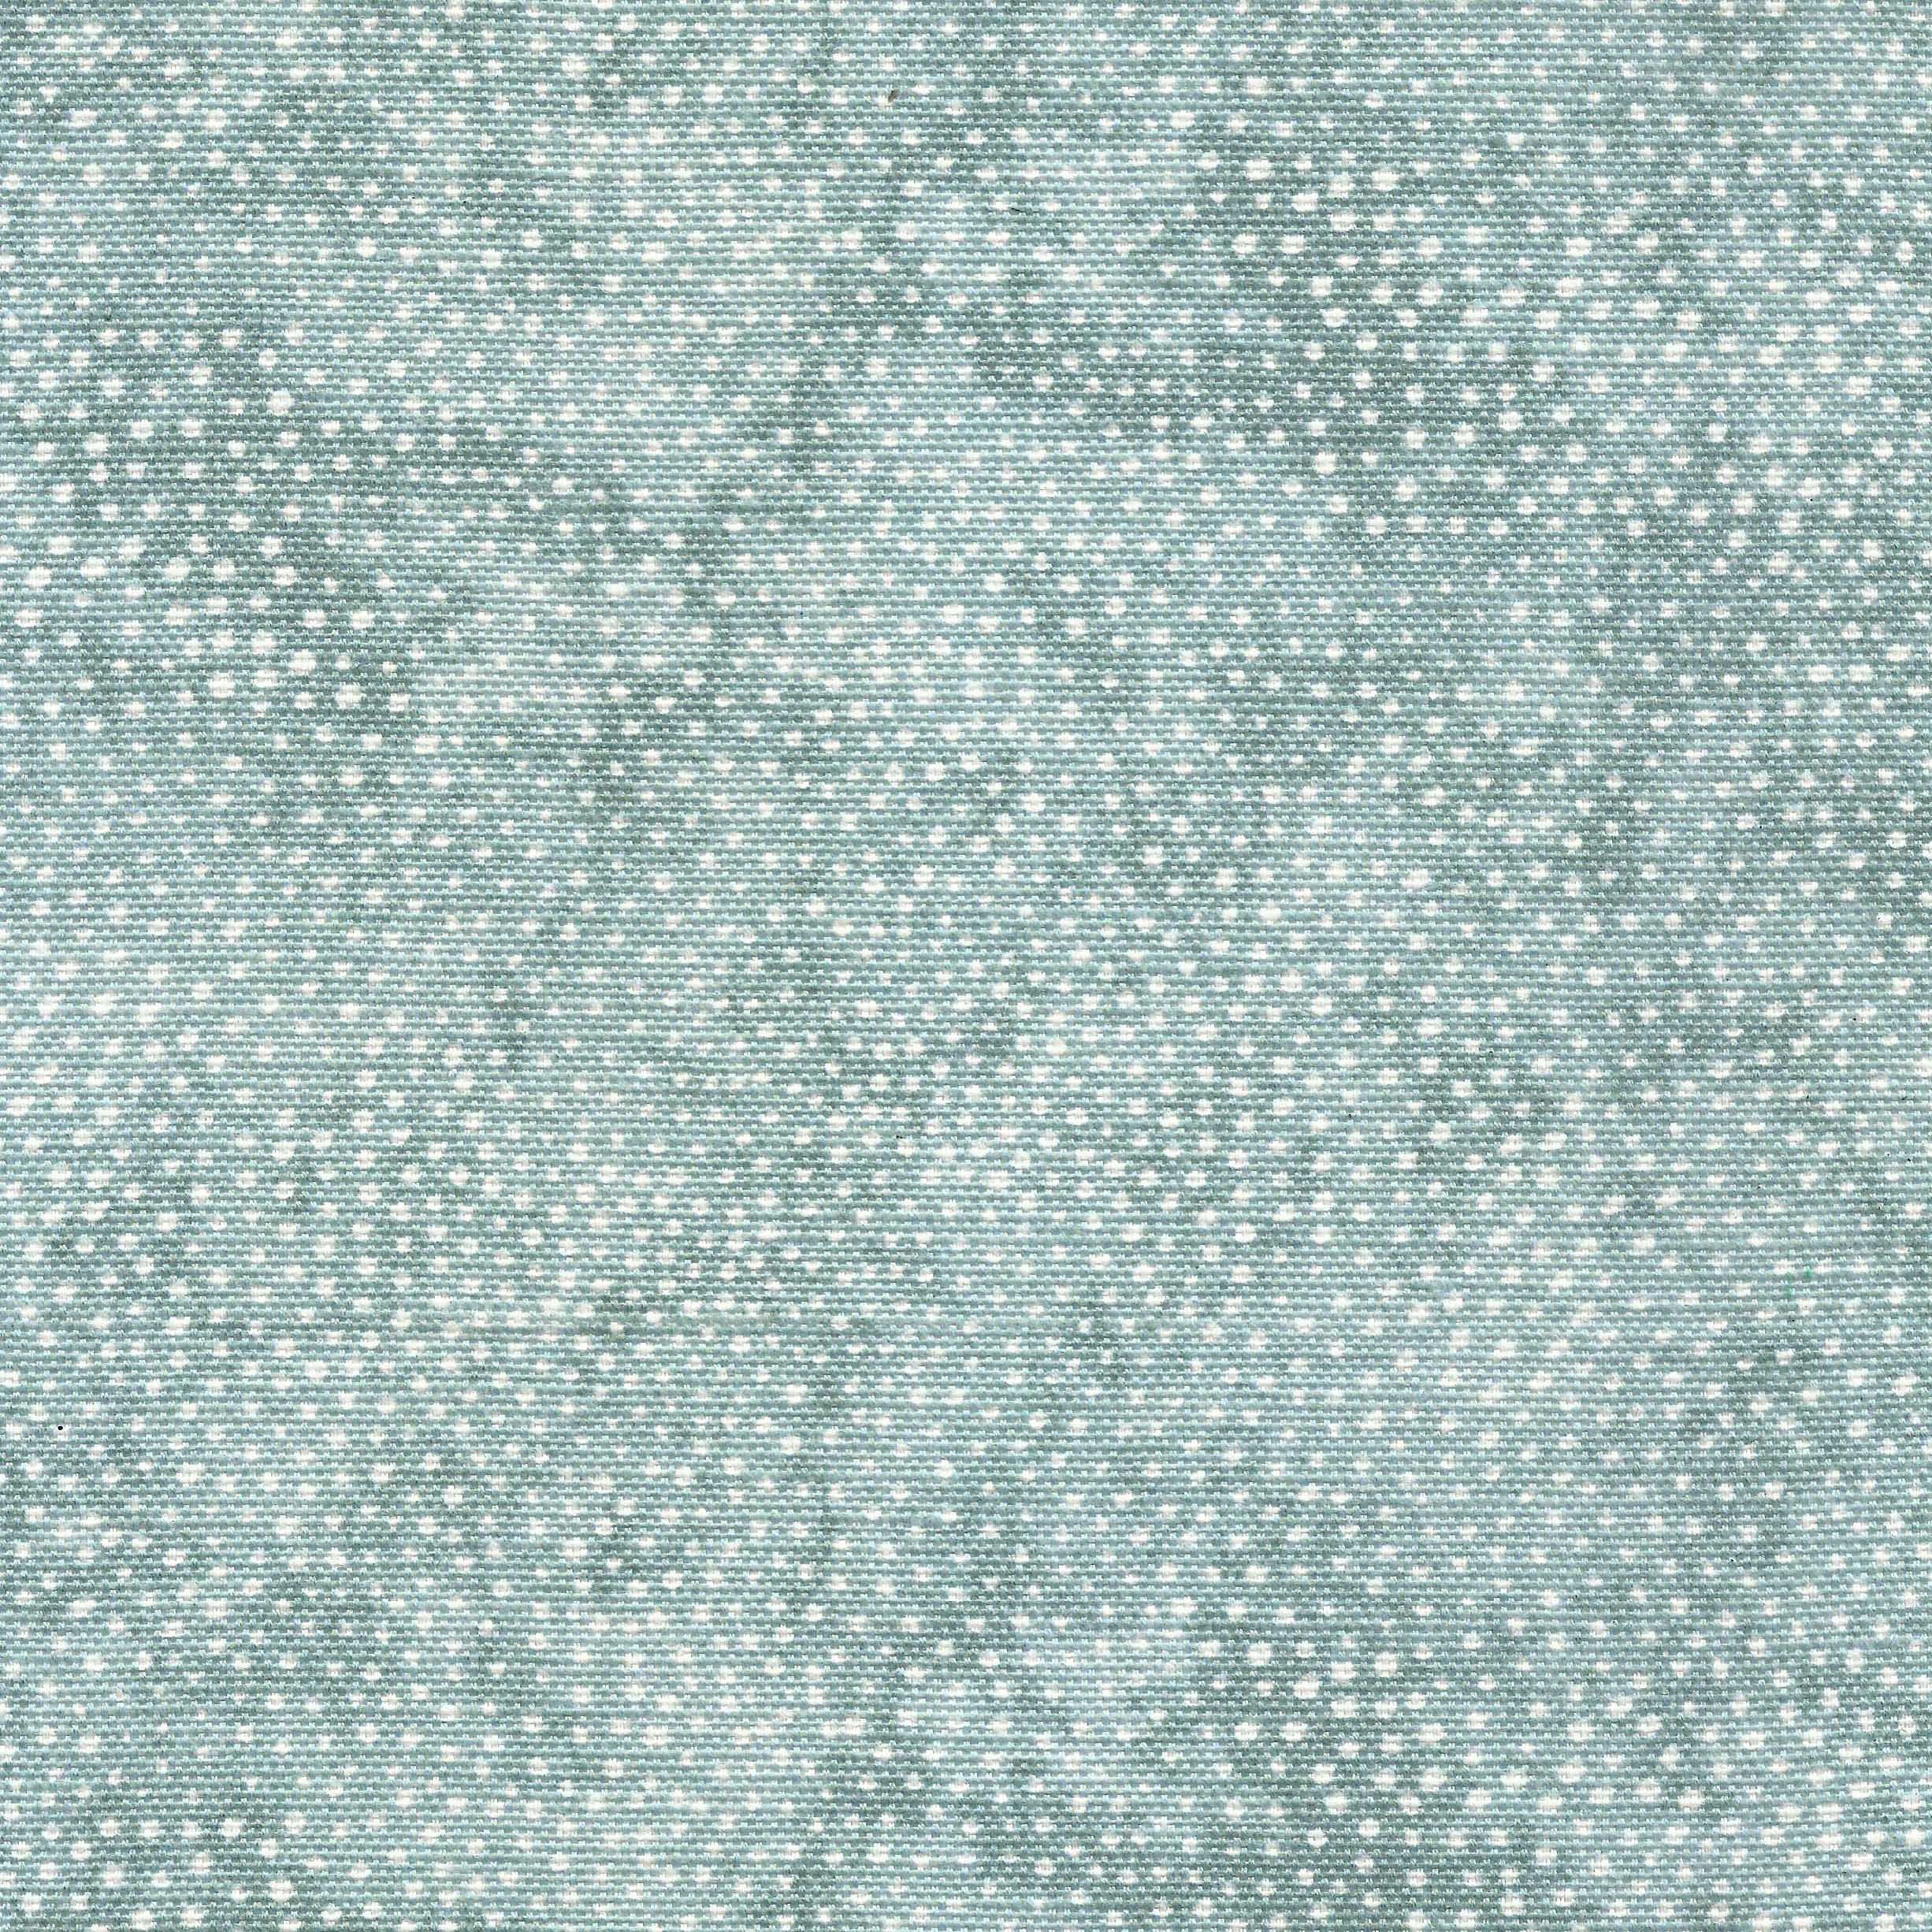 Textile-Medium for the Serviette Technique 50ml — Hobby Art Chemaco